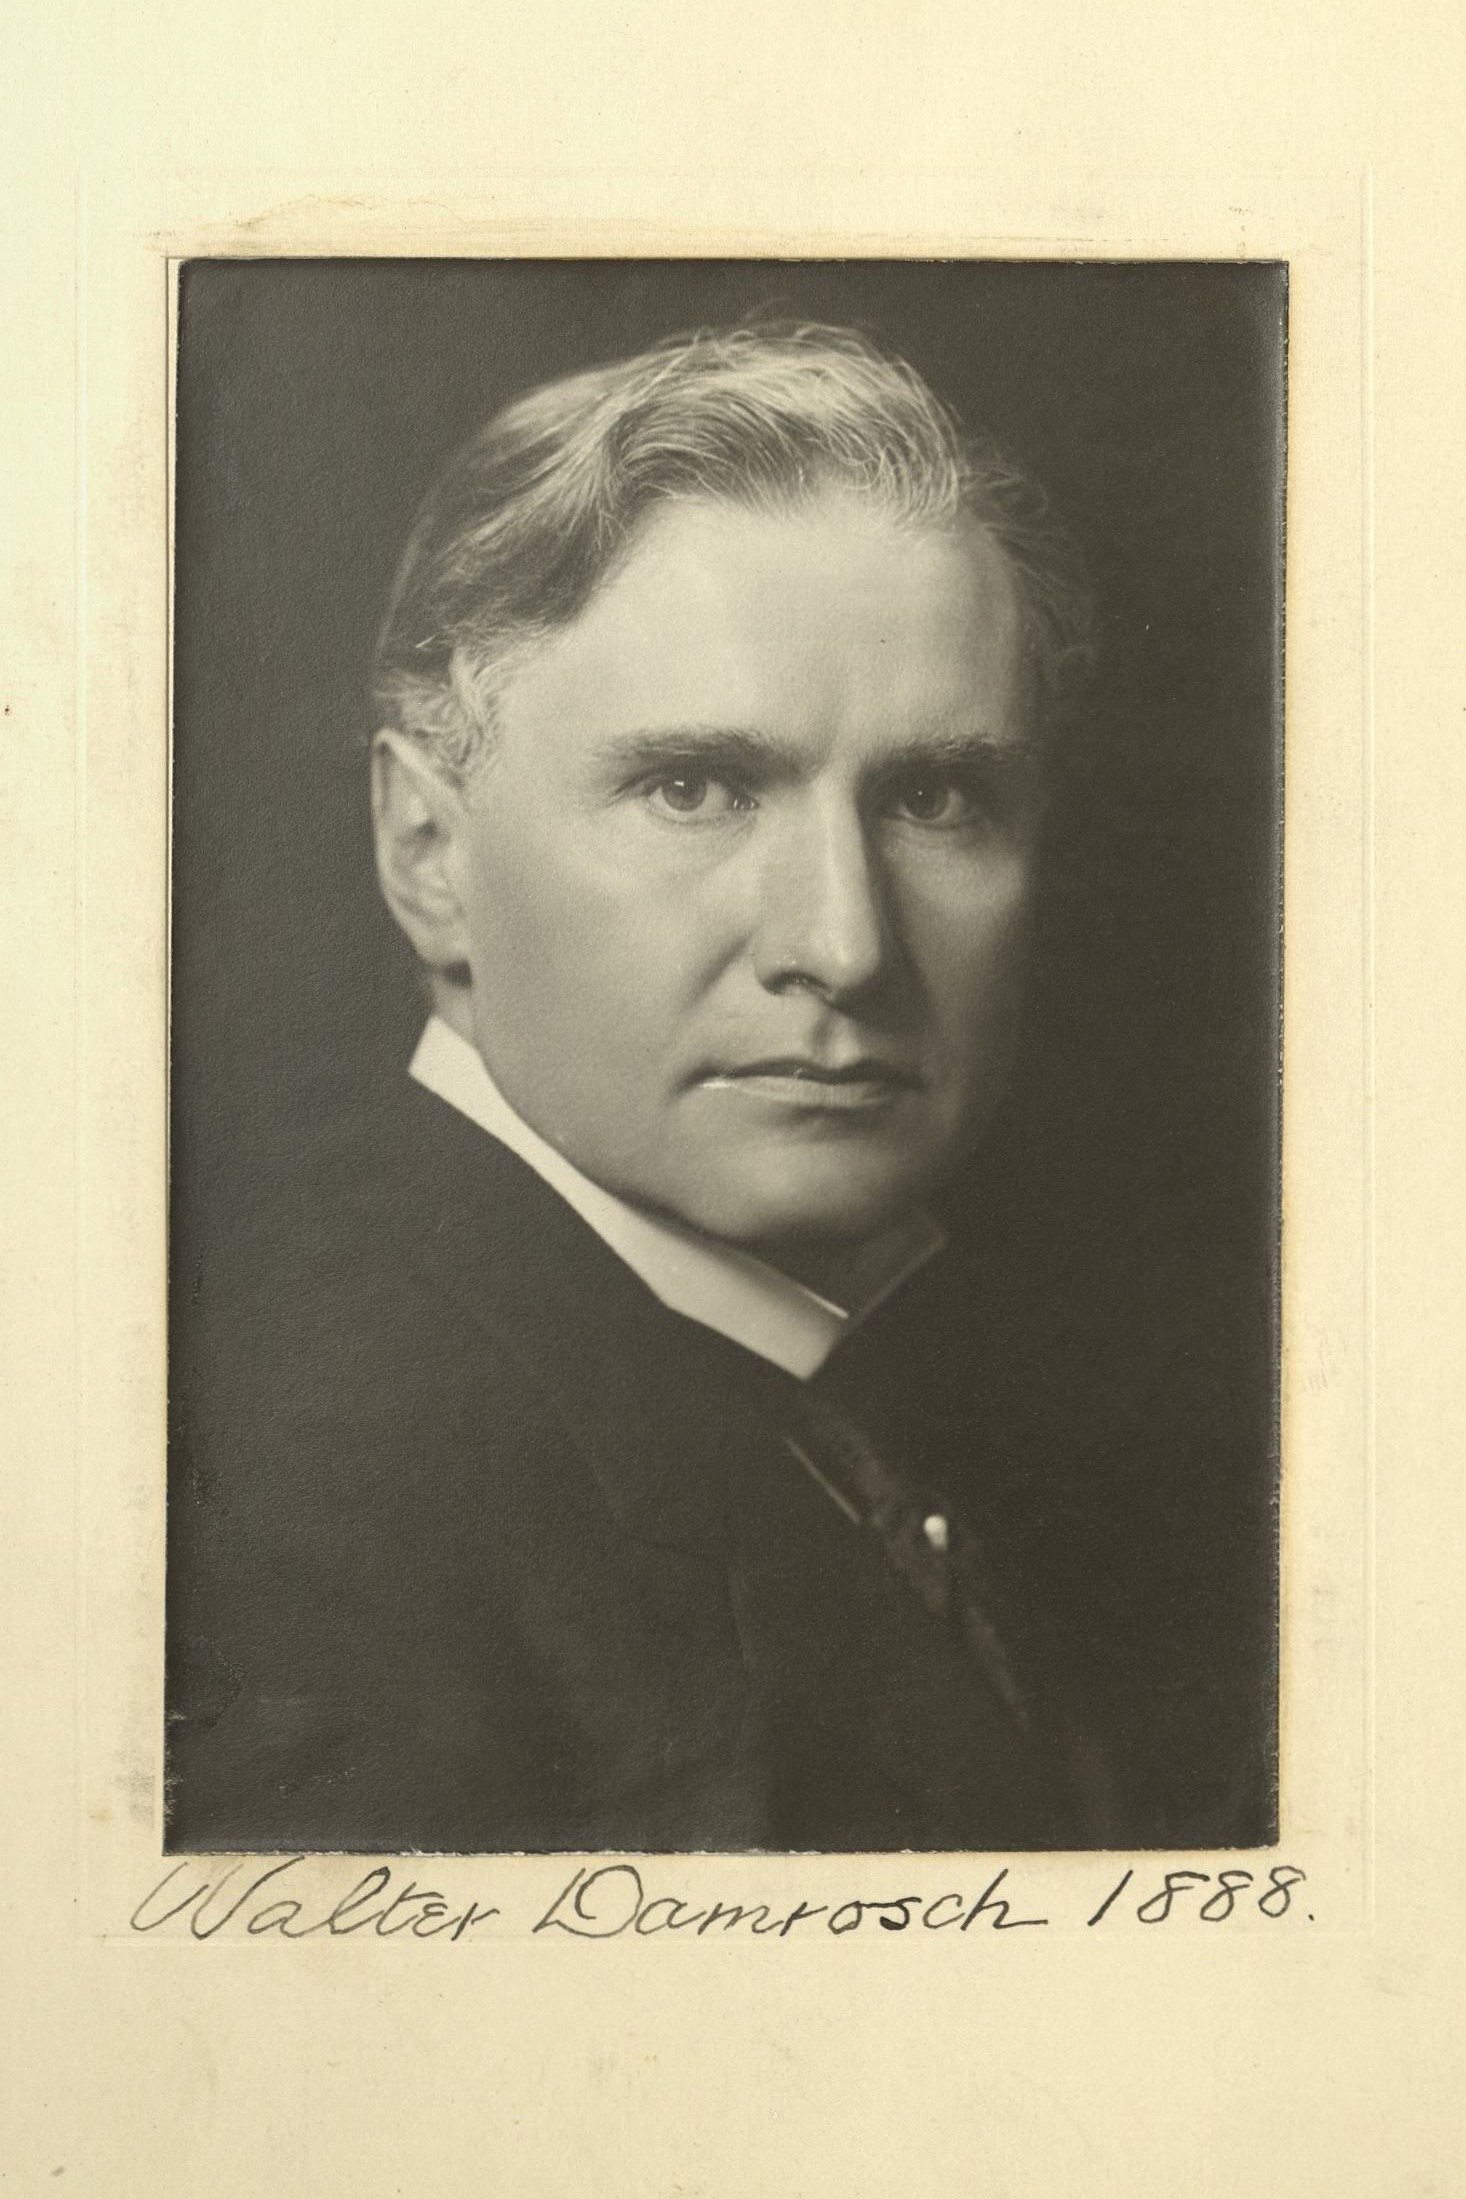 Member portrait of Walter Damrosch